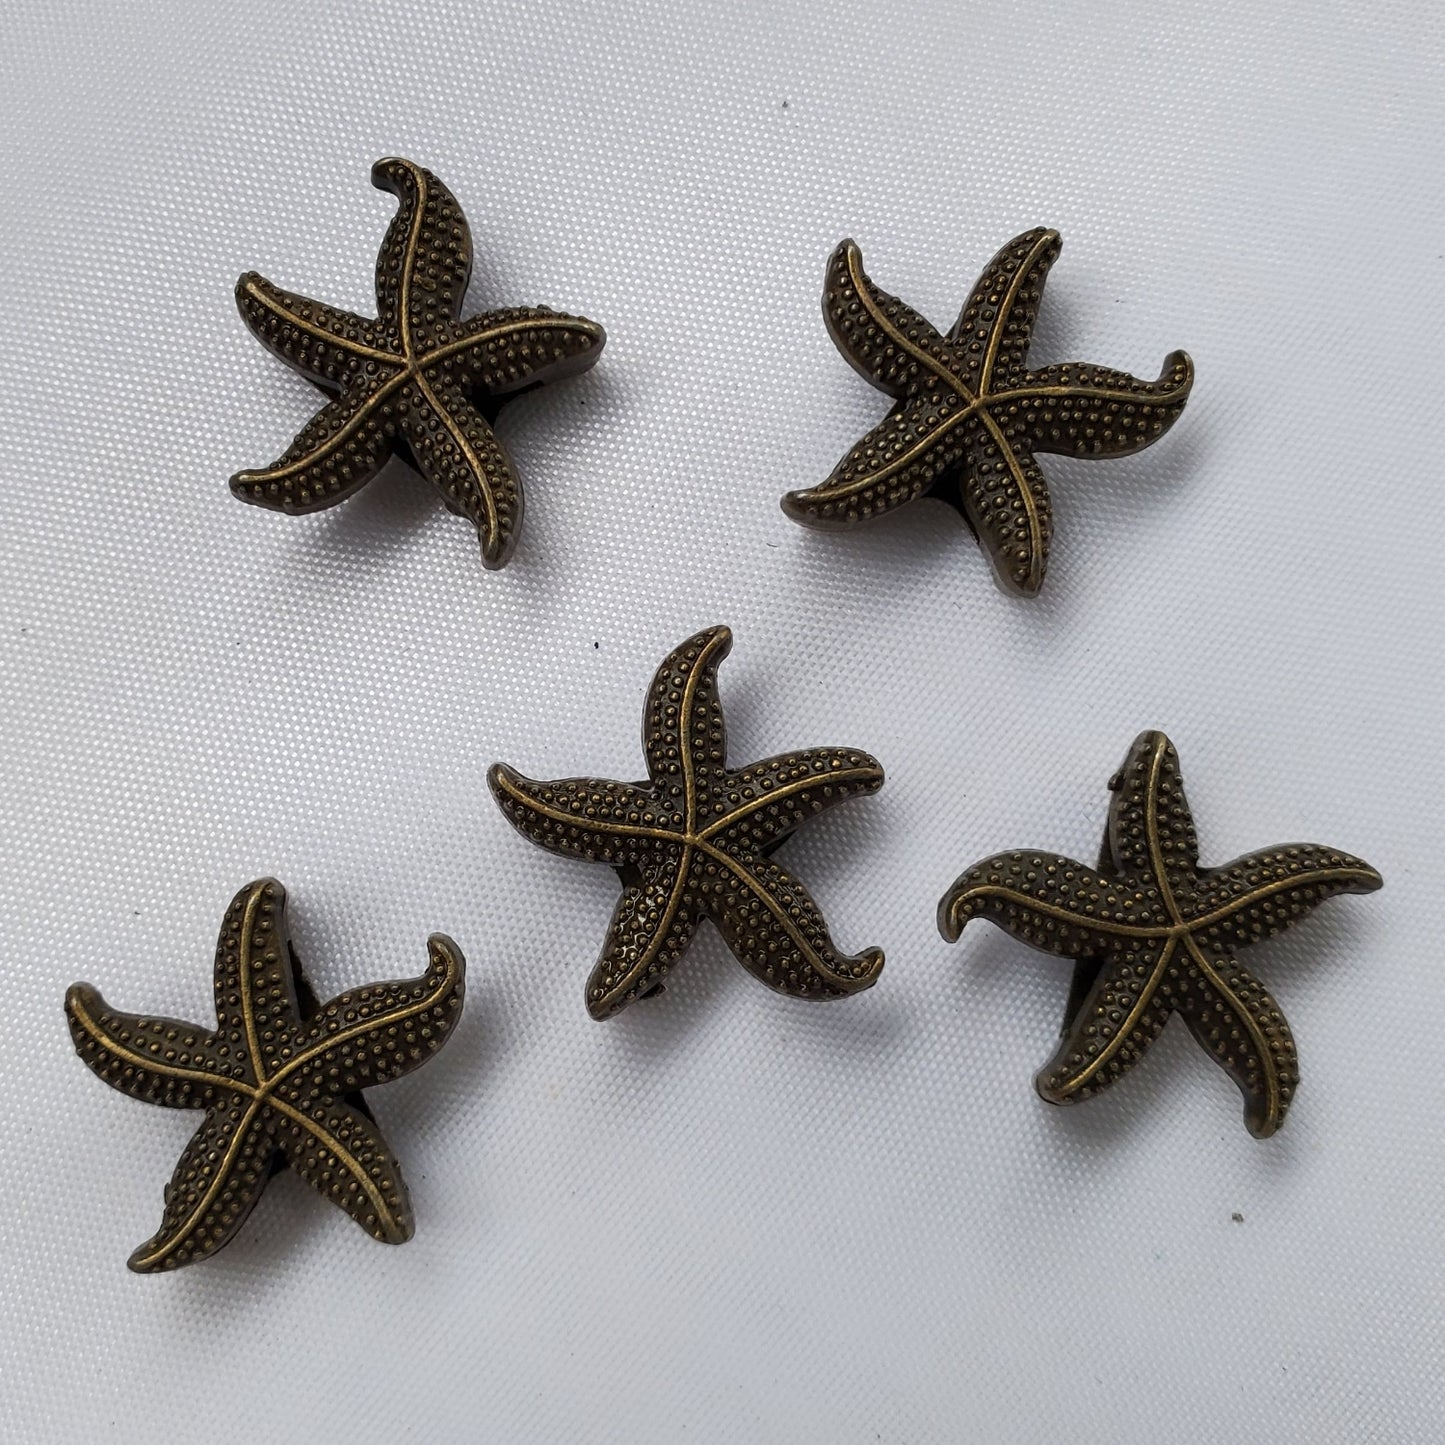 10 mm Sea Star Slider (5)